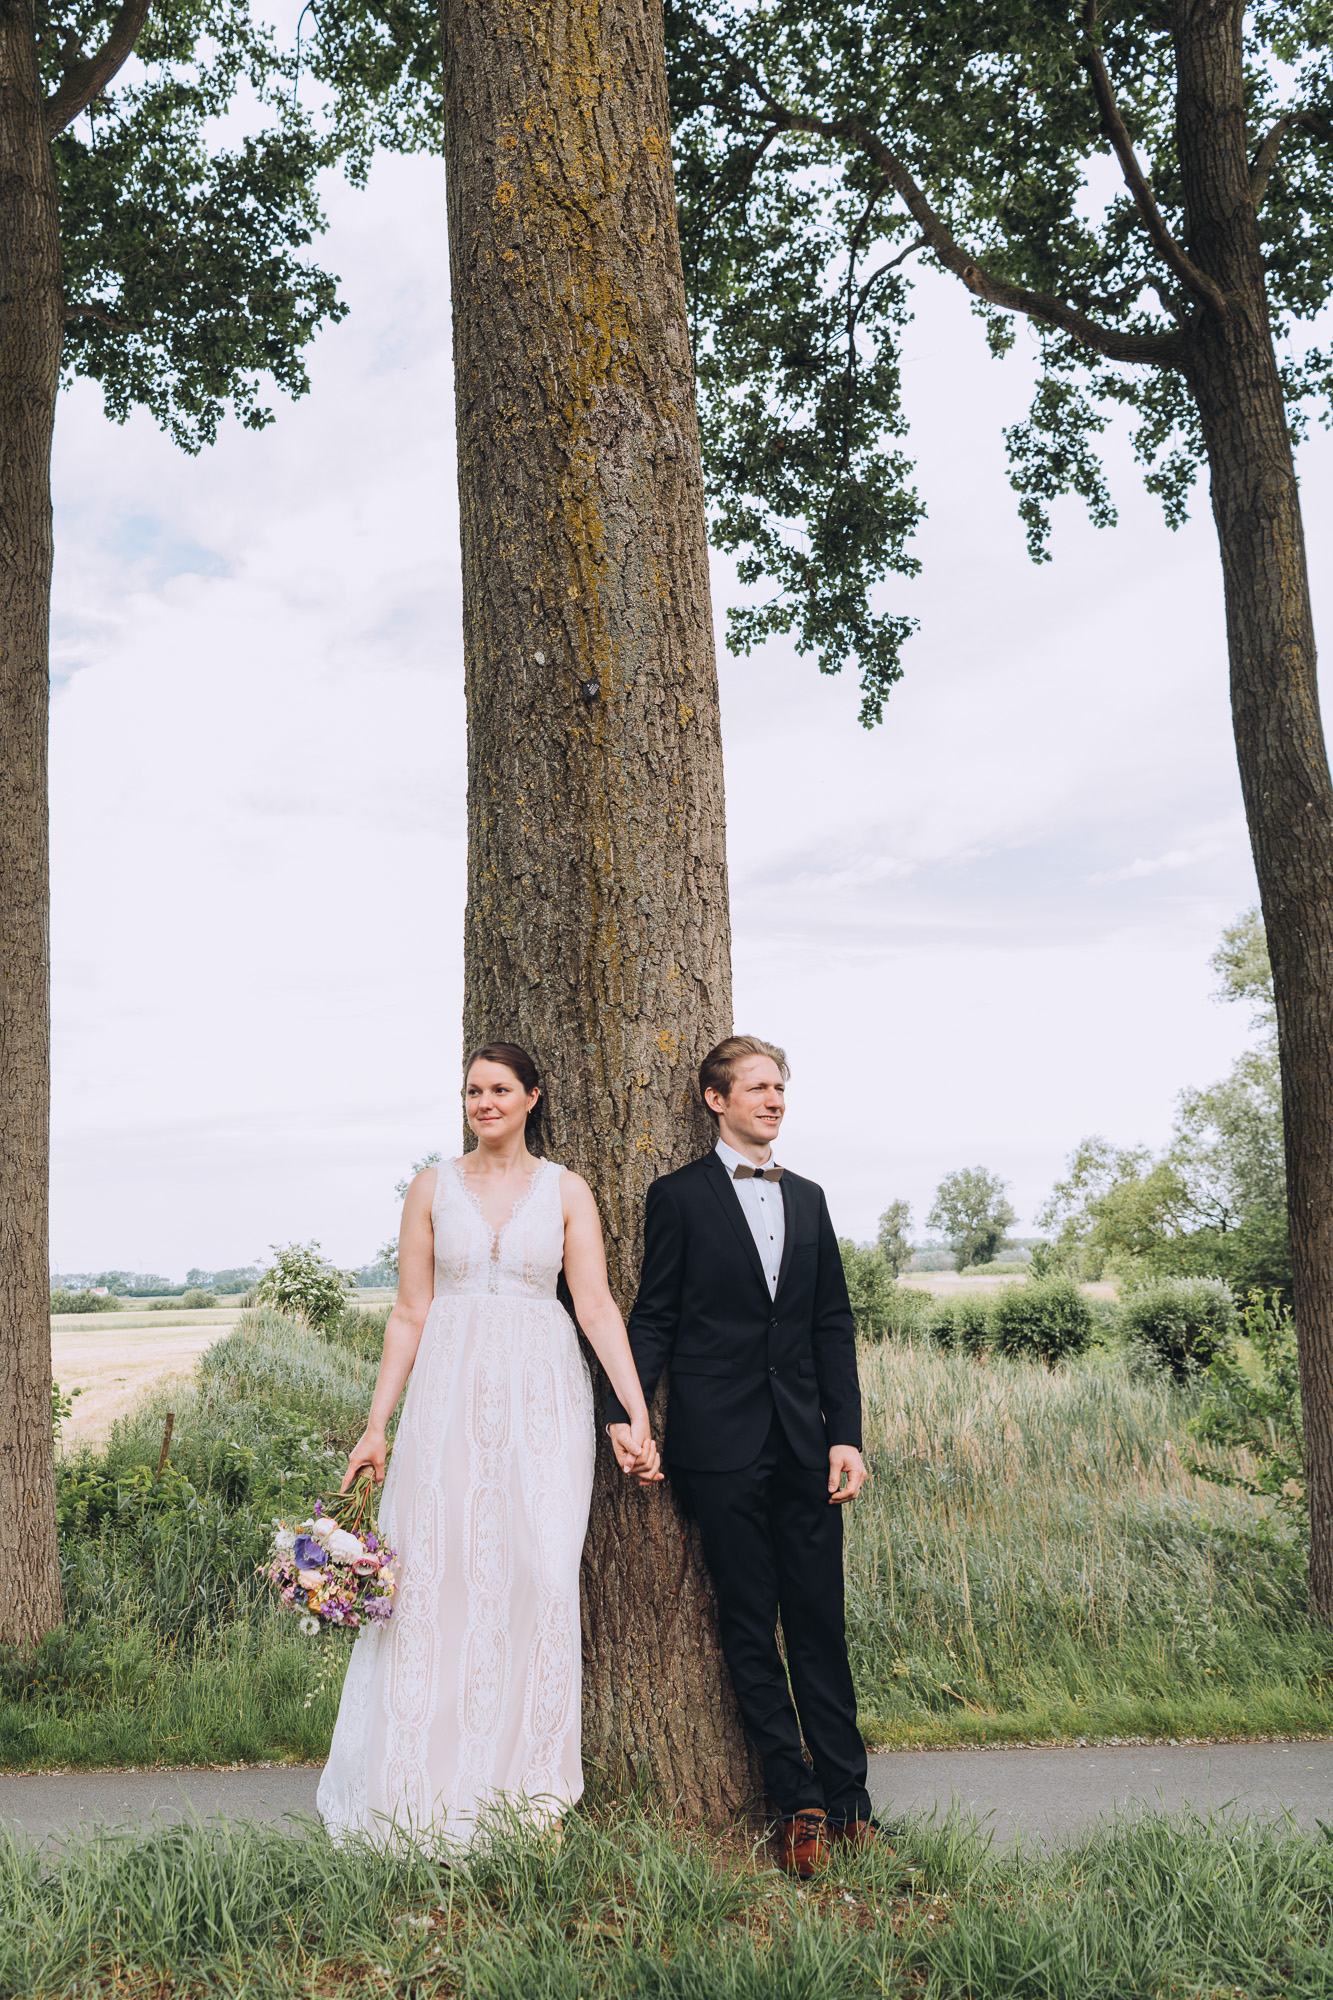 Huwelijksfotograaf Brugge Jessie en Thomas